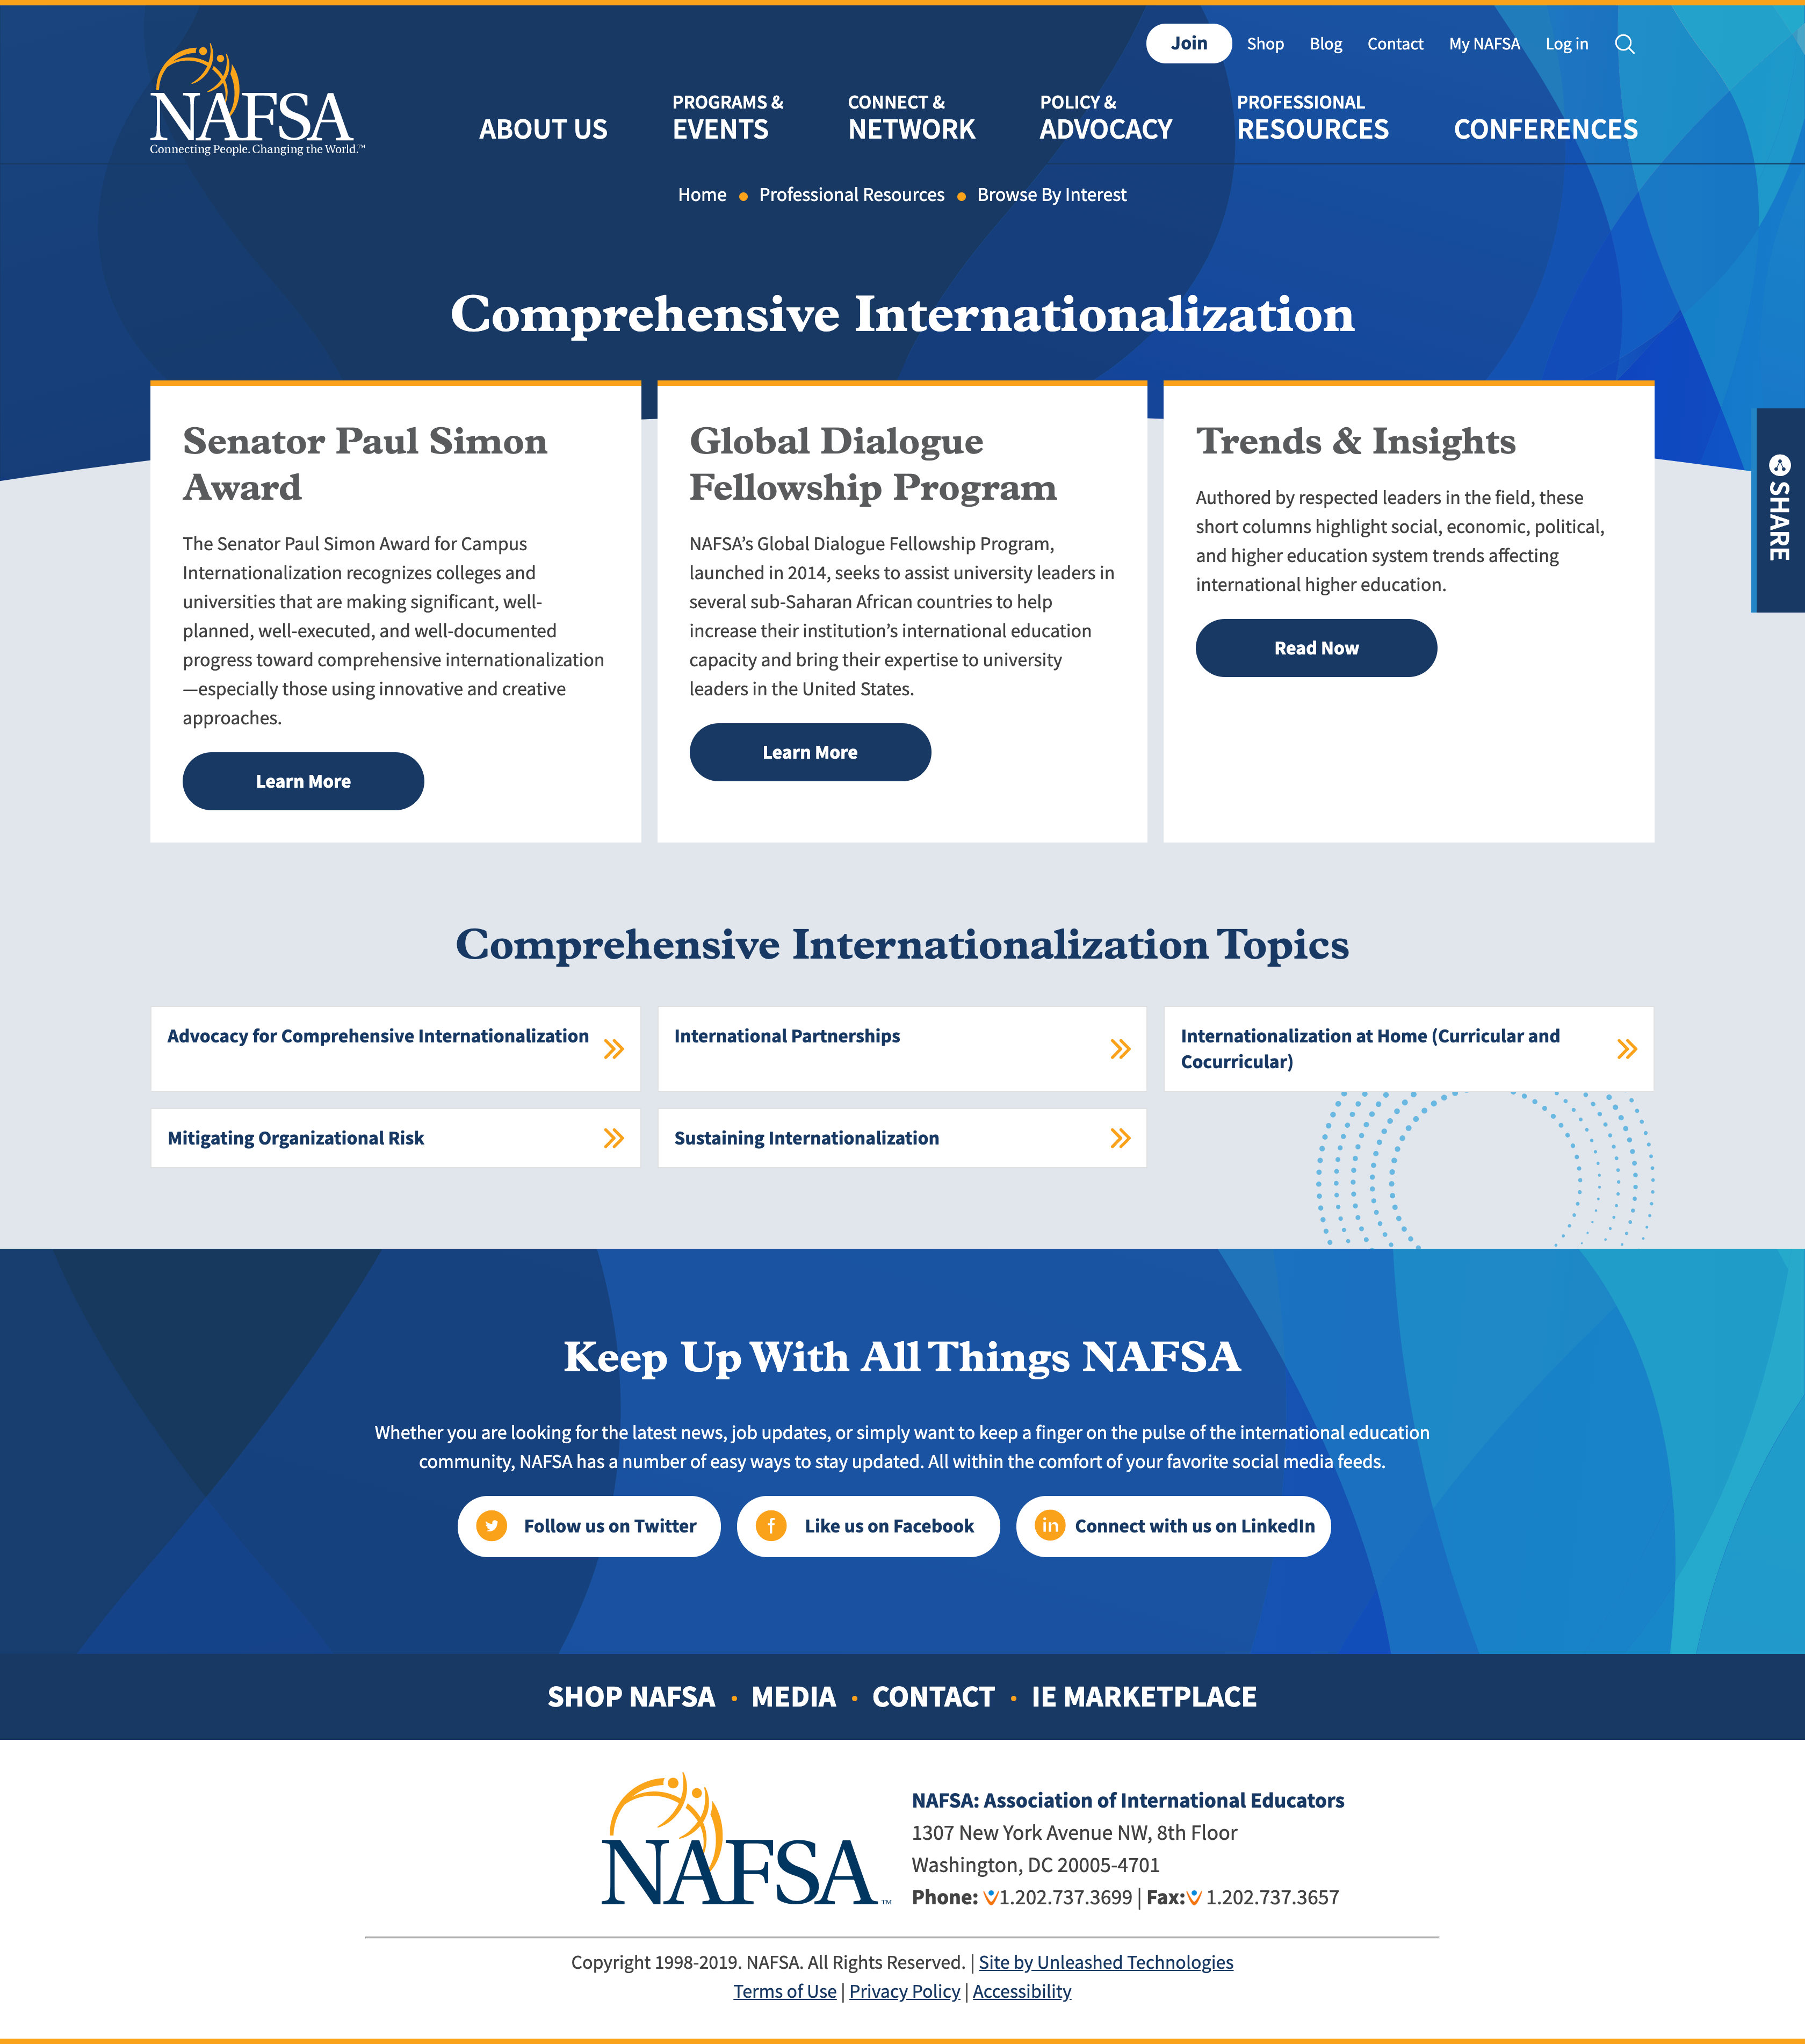 Vega Digital Awards Winner - NAFSA Digital Experience